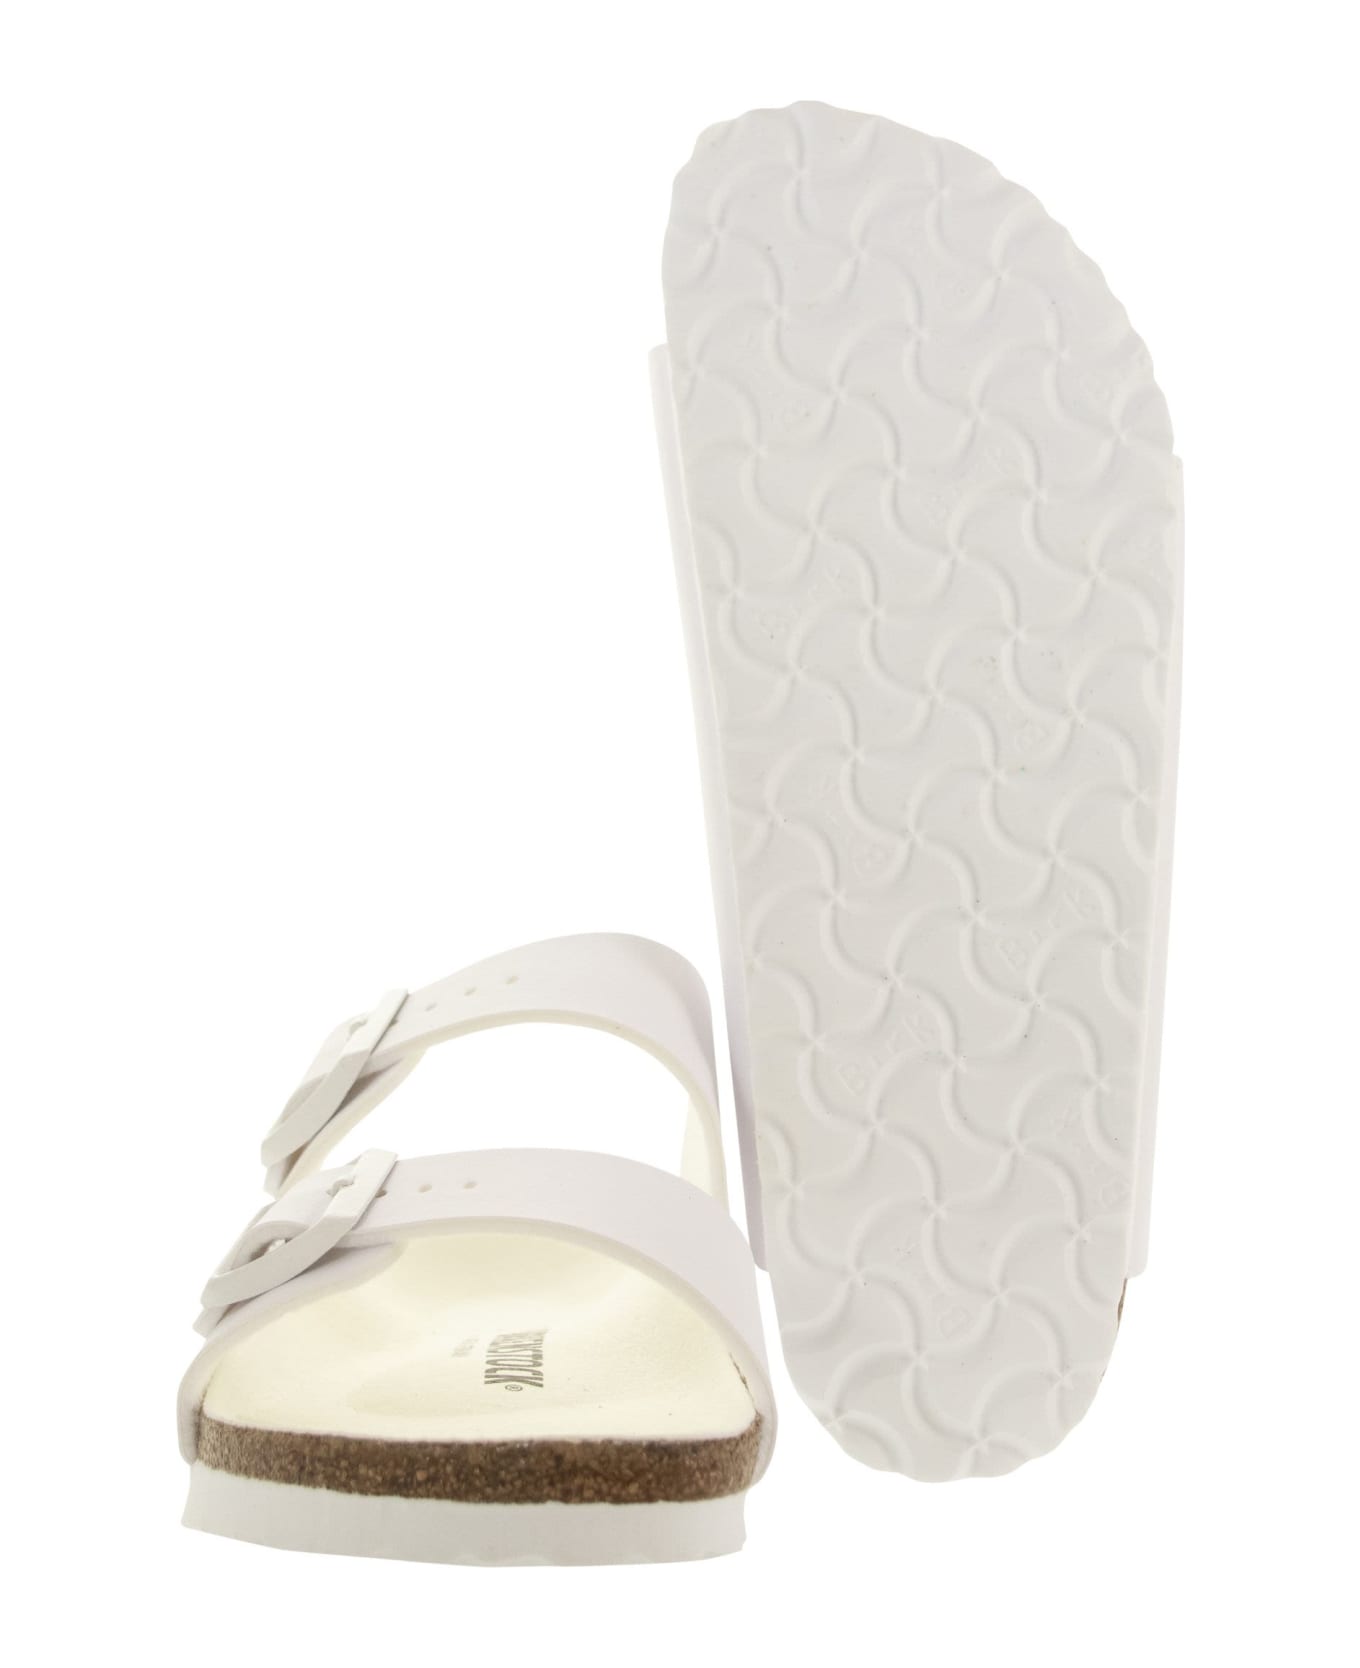 Birkenstock Arizona - Slipper Sandal - Triples white